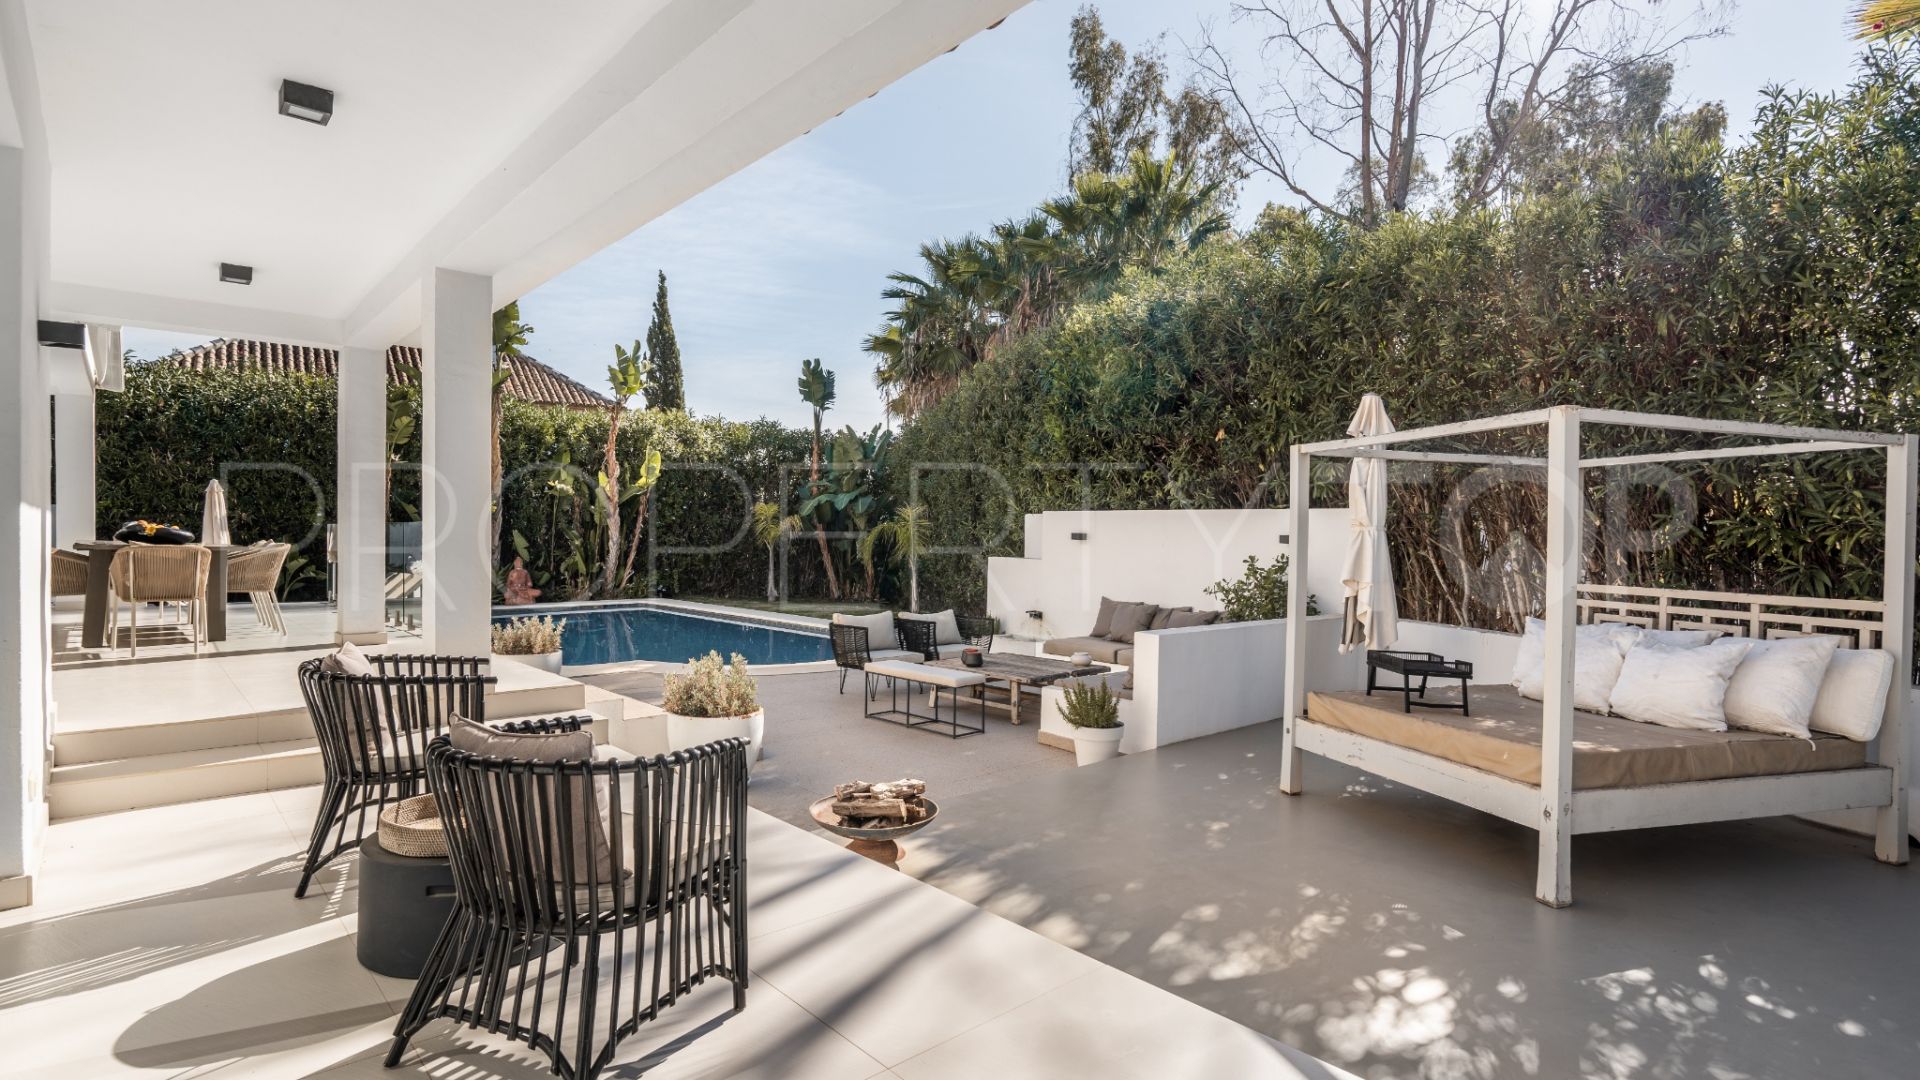 4 bedrooms villa in Marbella Country Club for sale